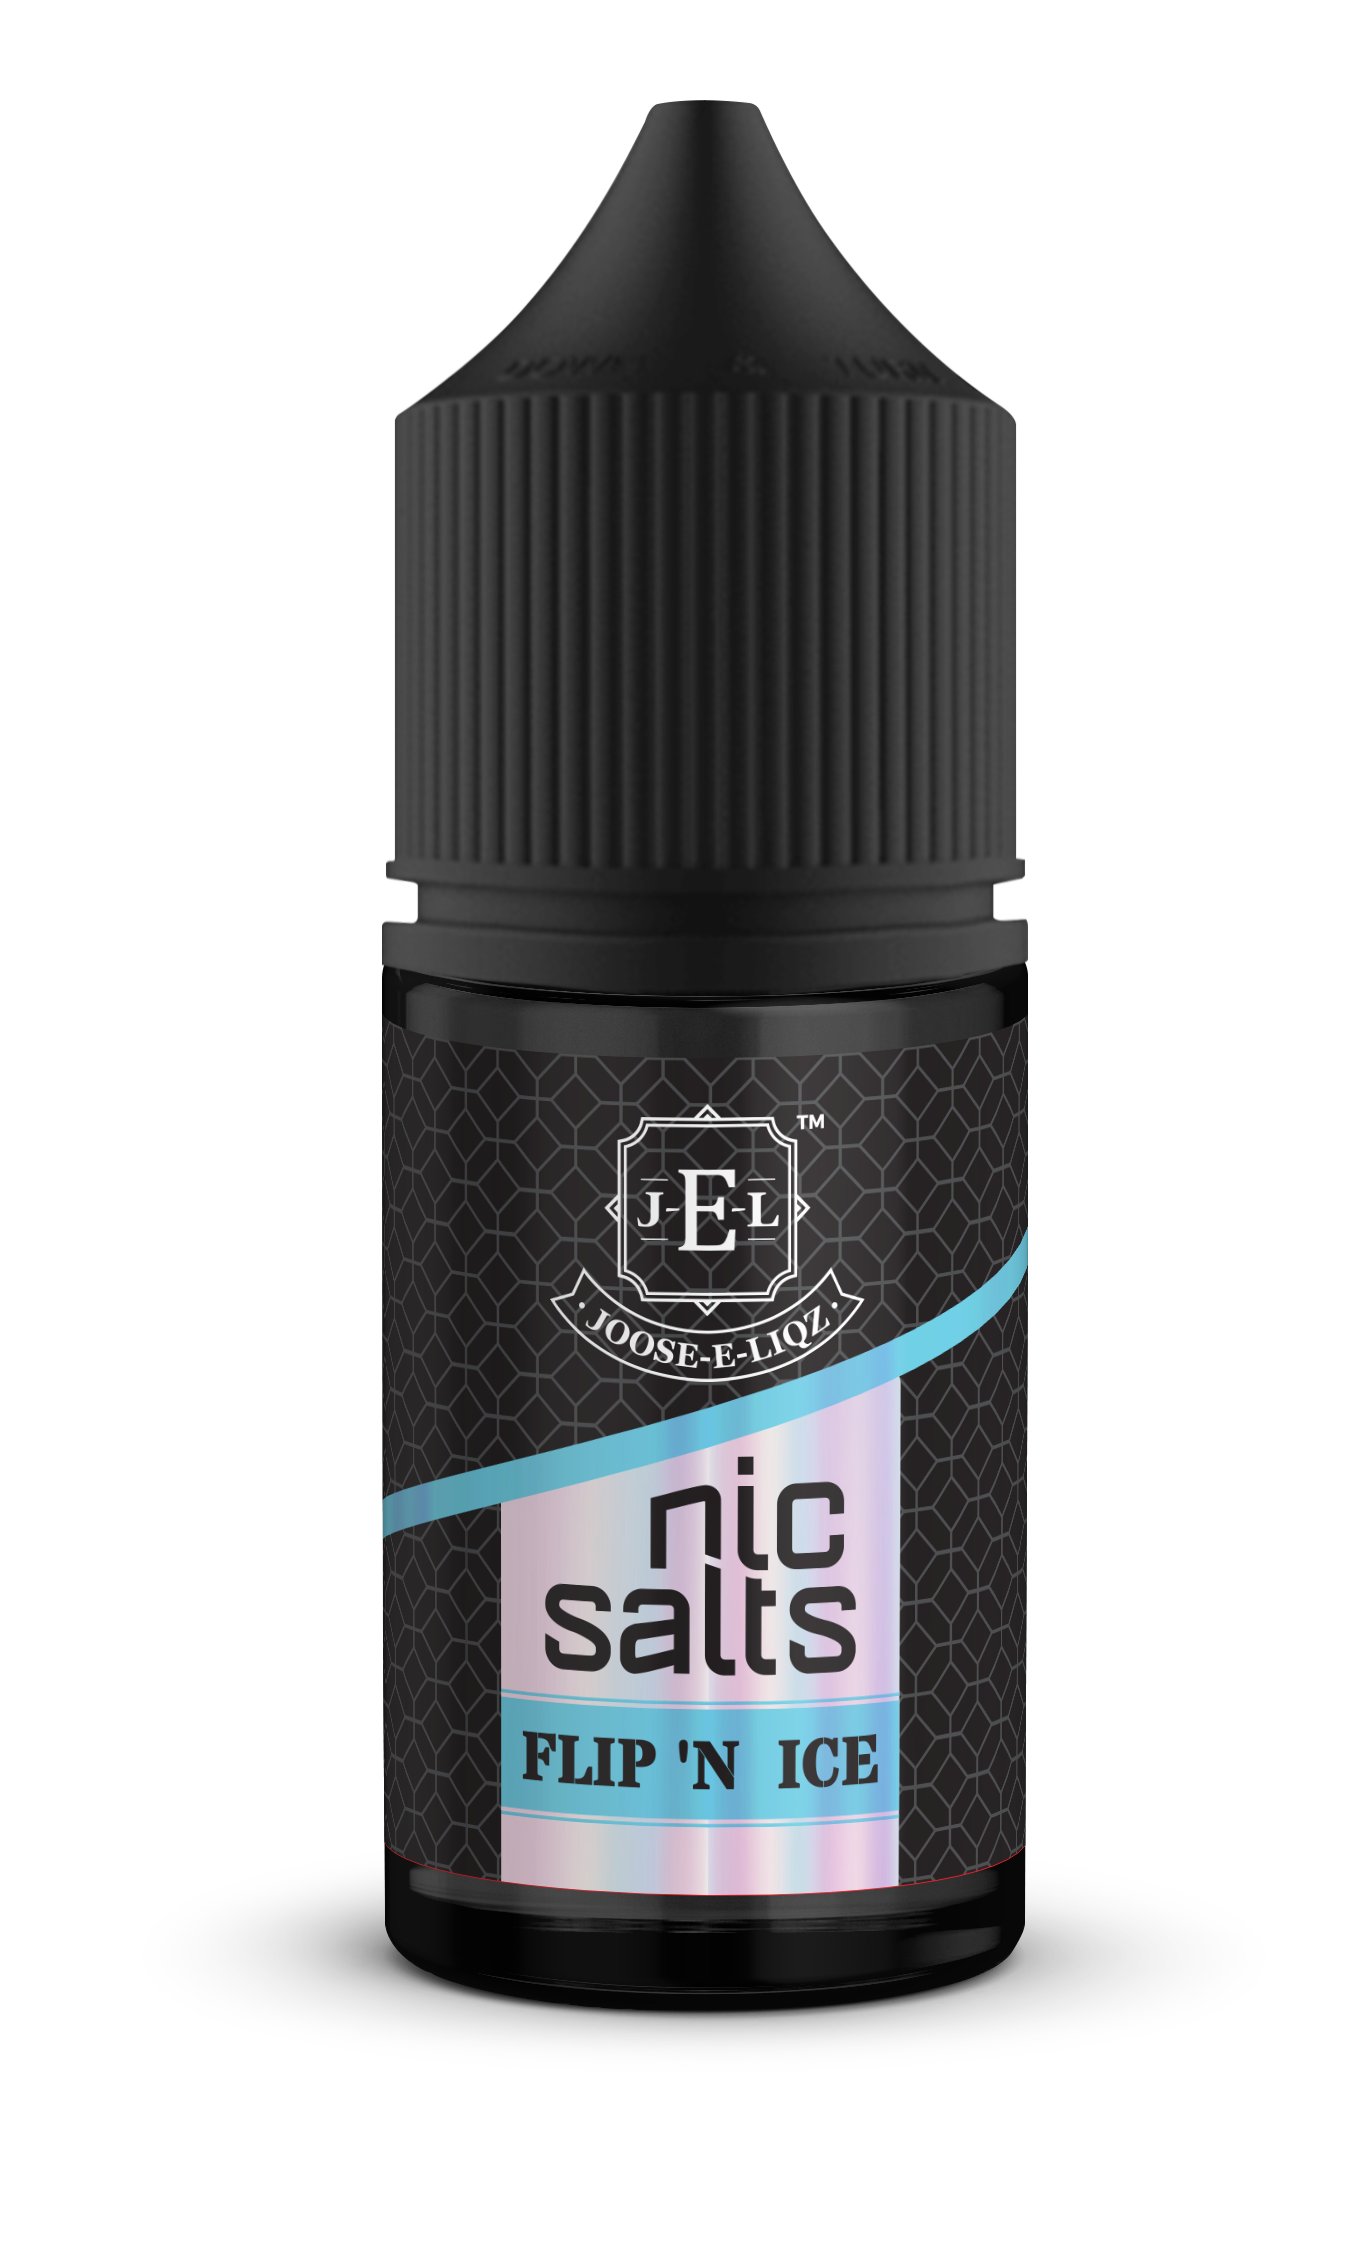 Joose-E-Liqz Salt Nic E-Liquid - FLIP N ICE